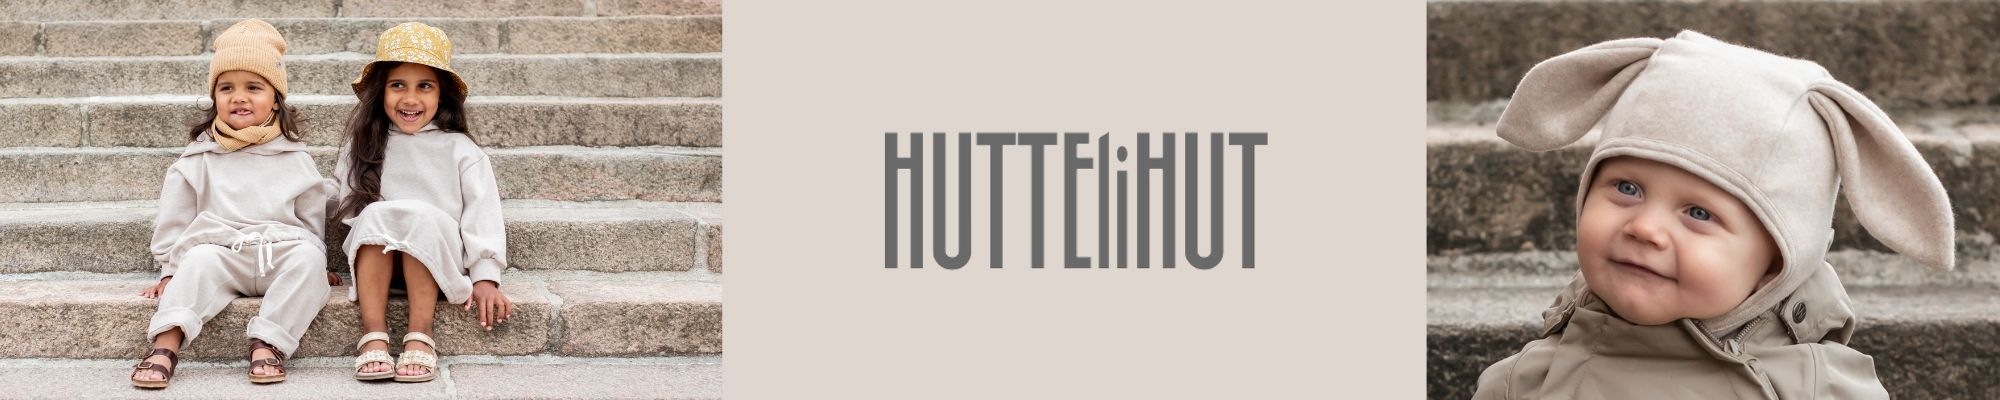 Huttelihut banner